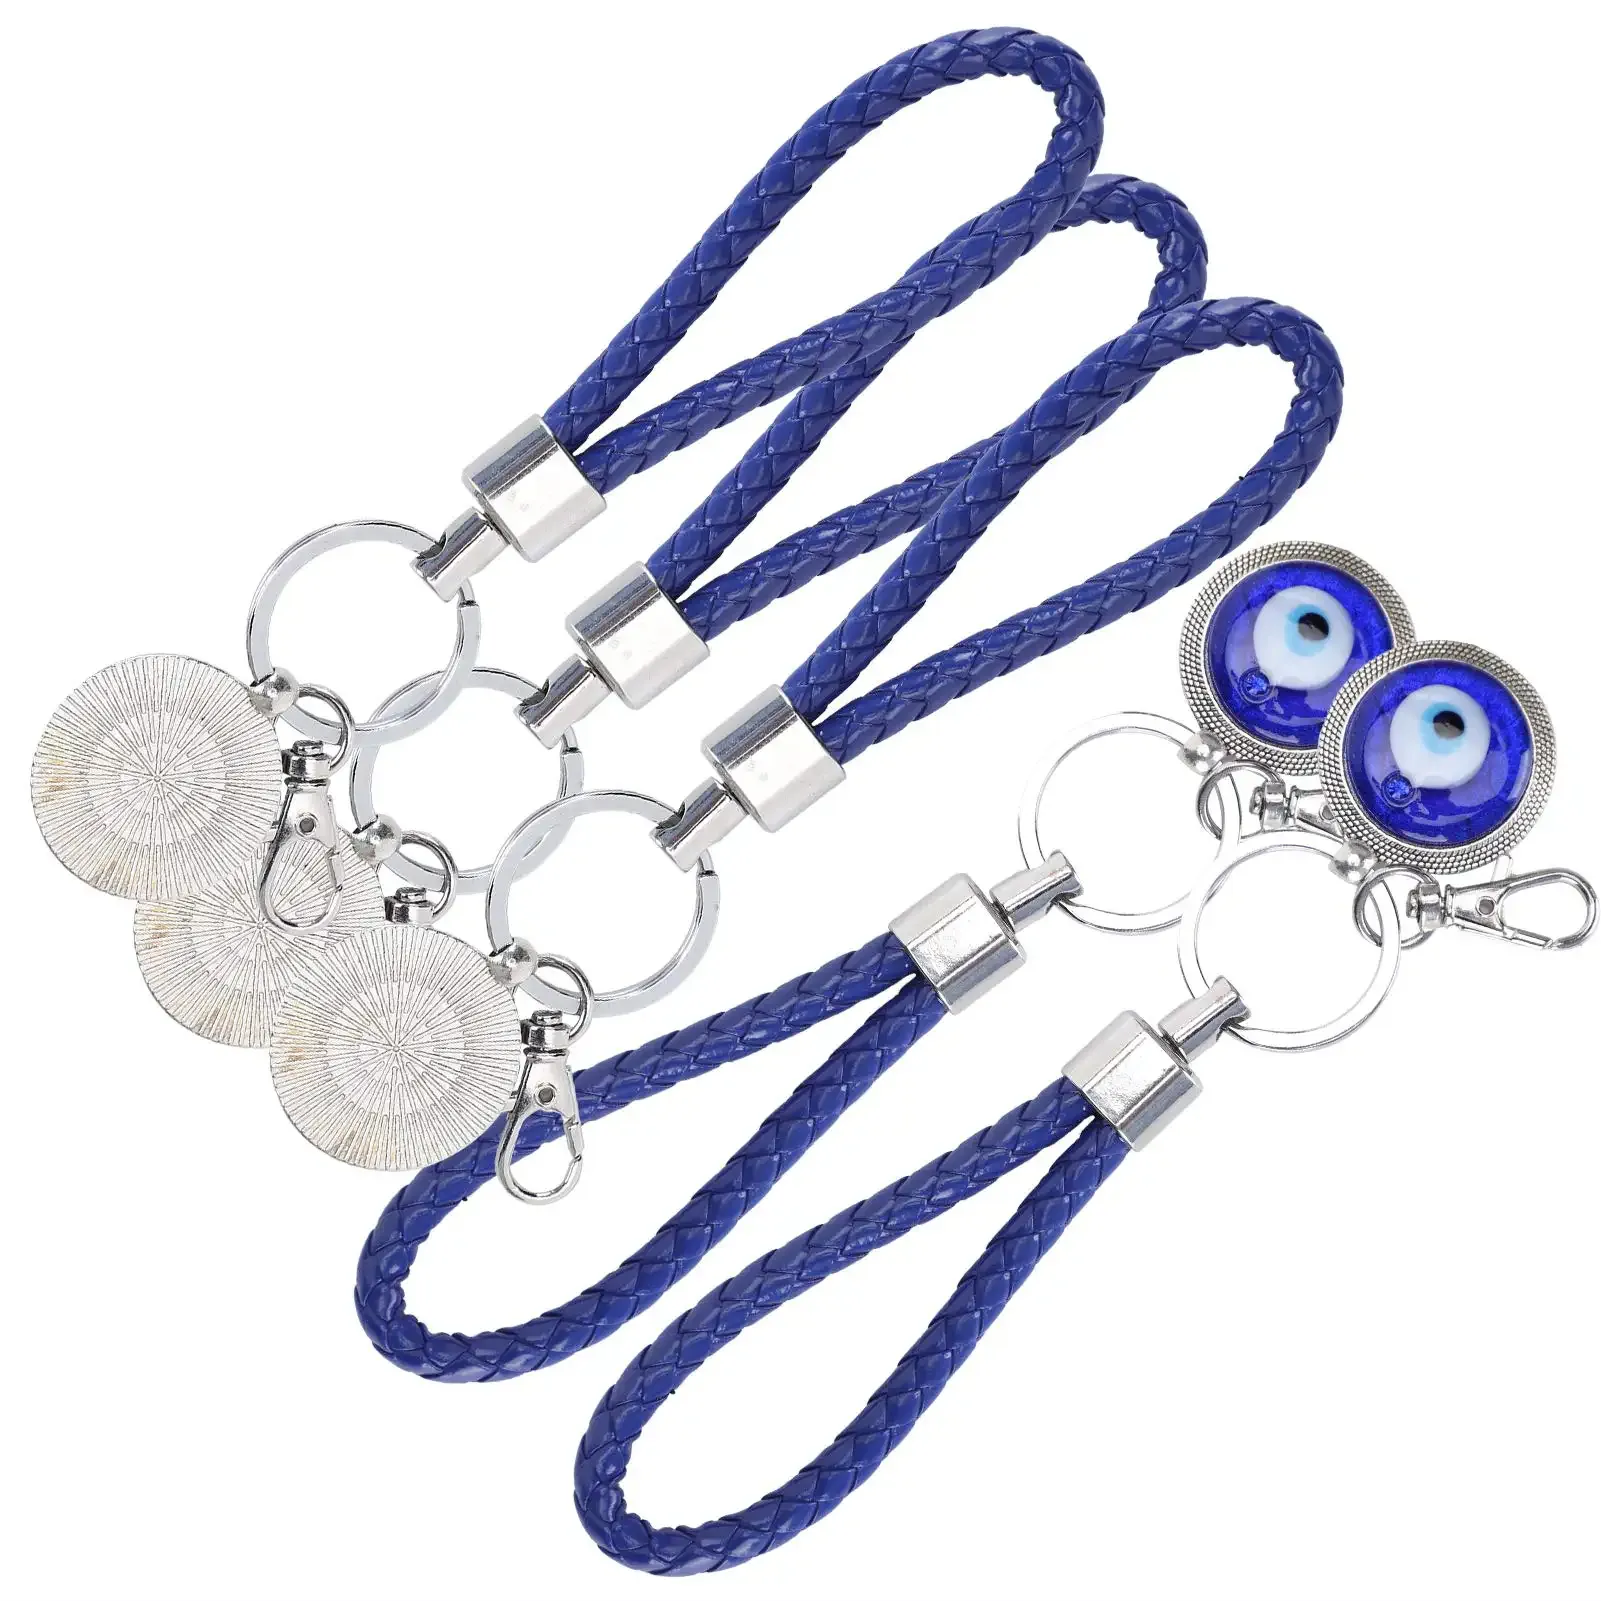 3ml evil eye keychain turkish blue evil eye keychain charms pendants evil eye amulet keychain for man woman purse handbag bag decoration gift